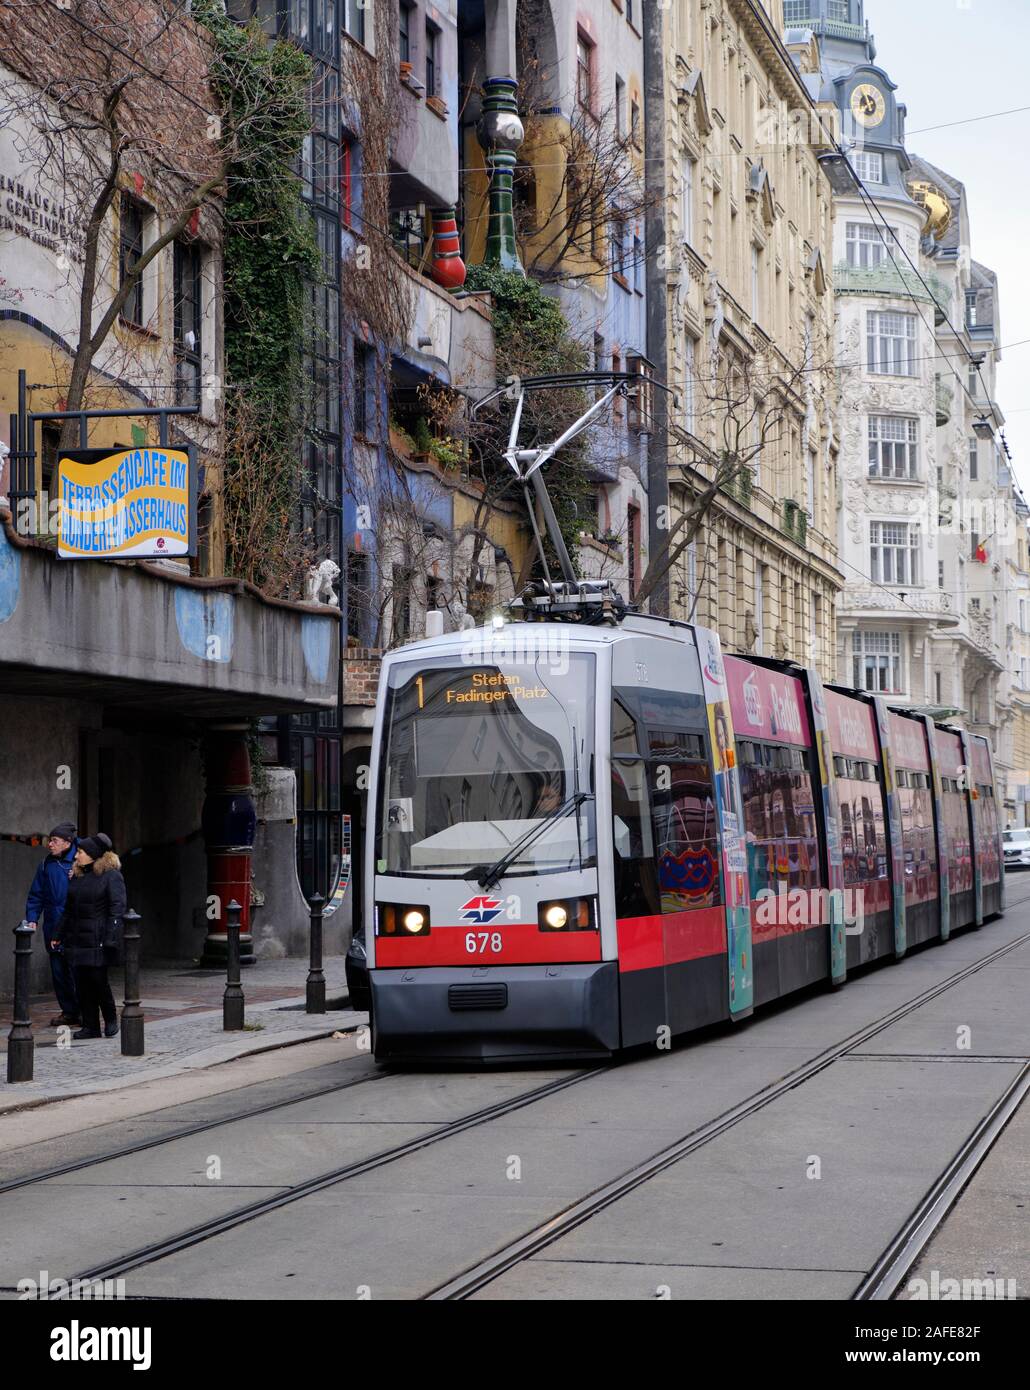 ULF type Vienna Tram riding on tracks in city neighbourhood passing an Hundertwasser designed building Stock Photo